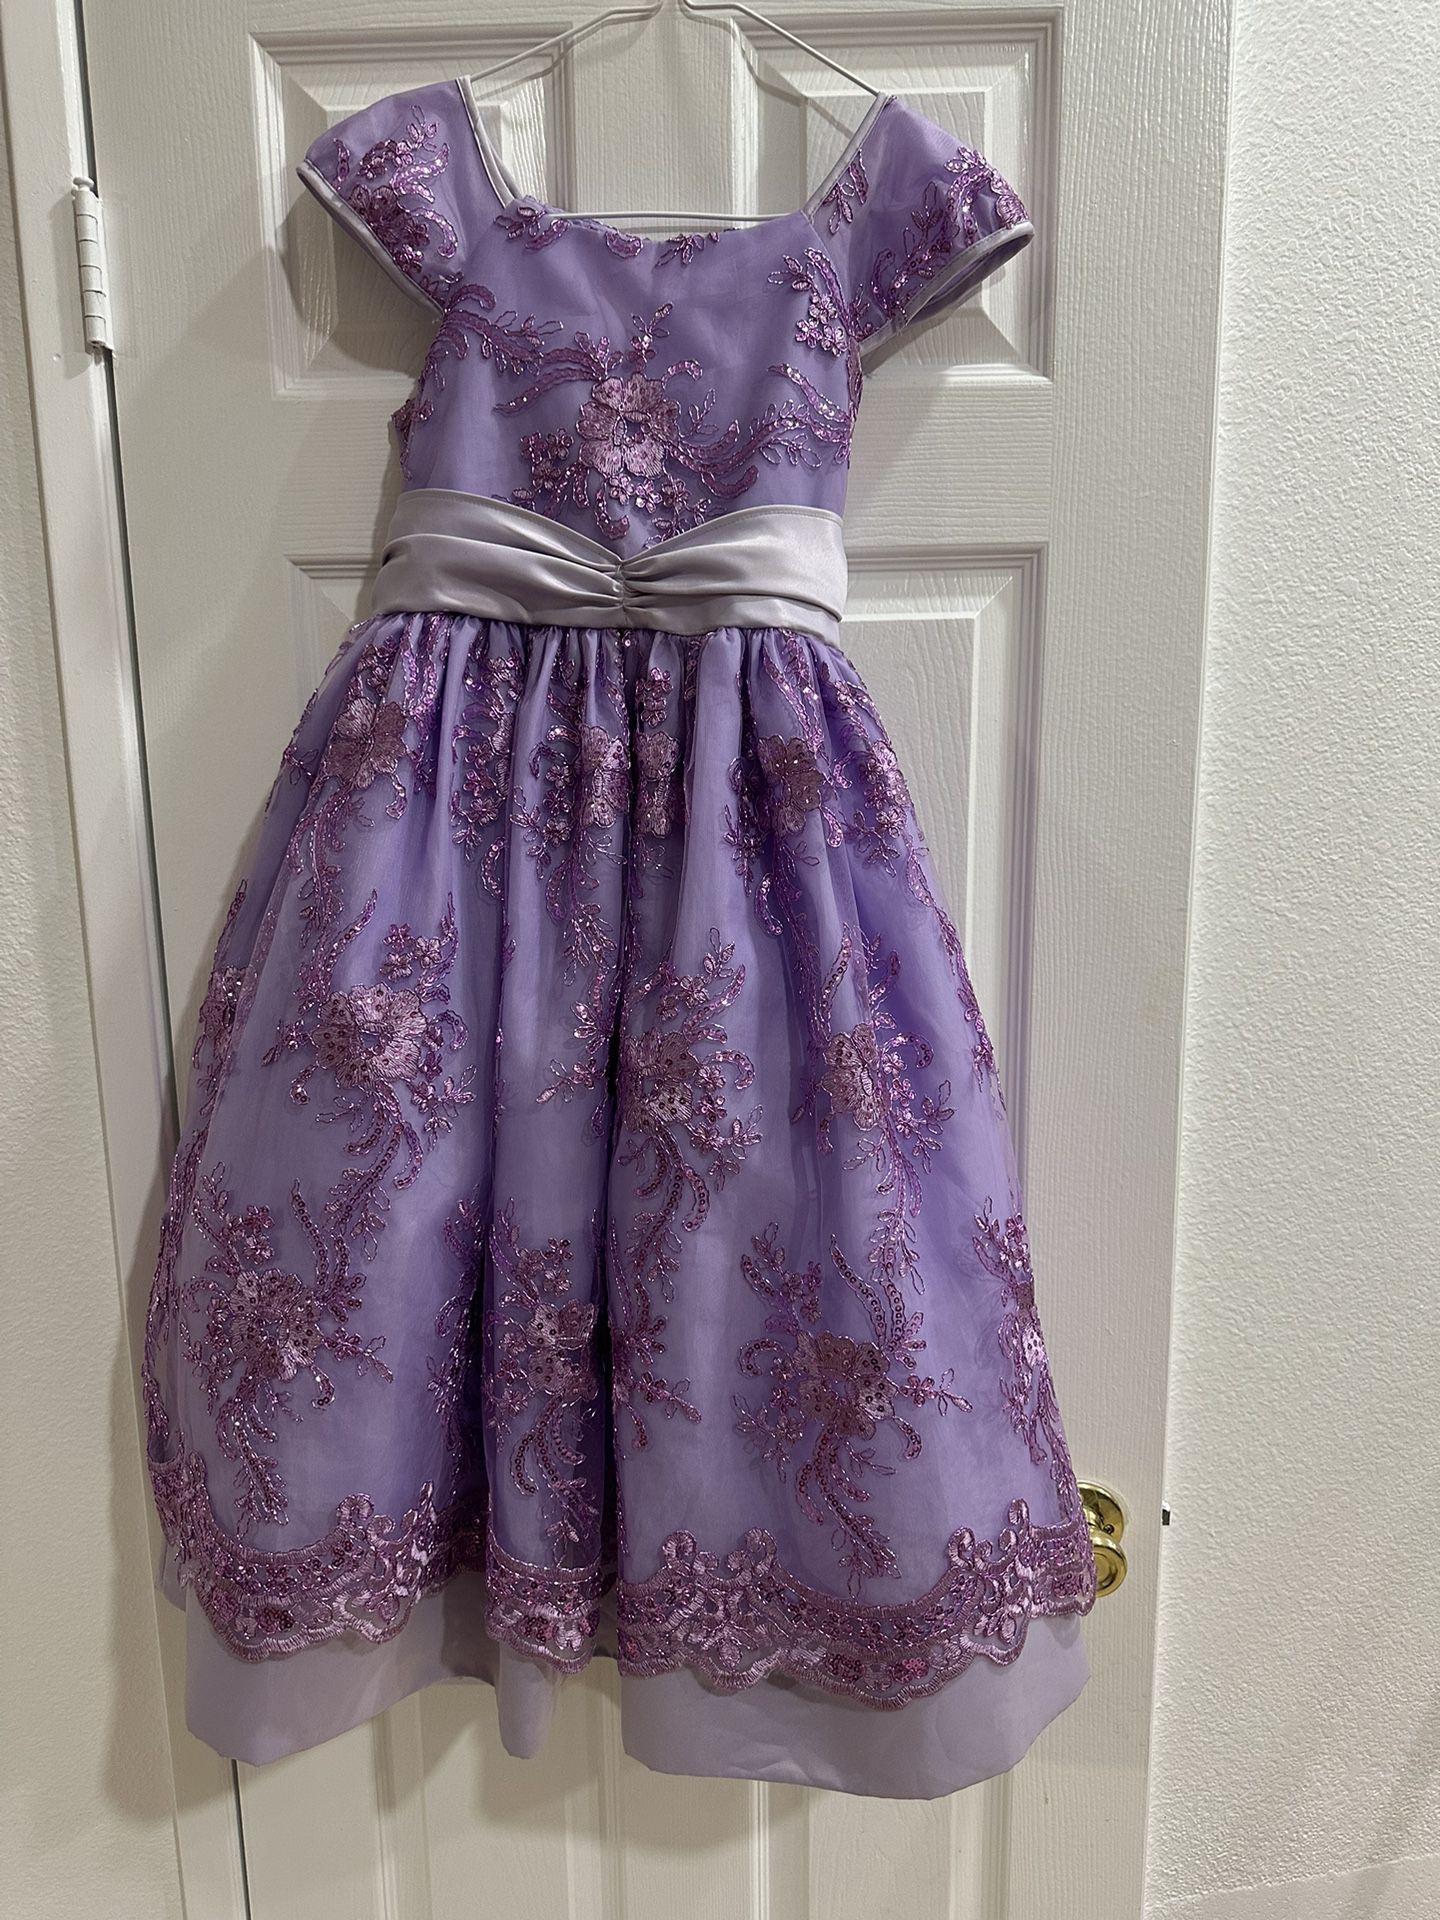 Purple Violet Girls Dress